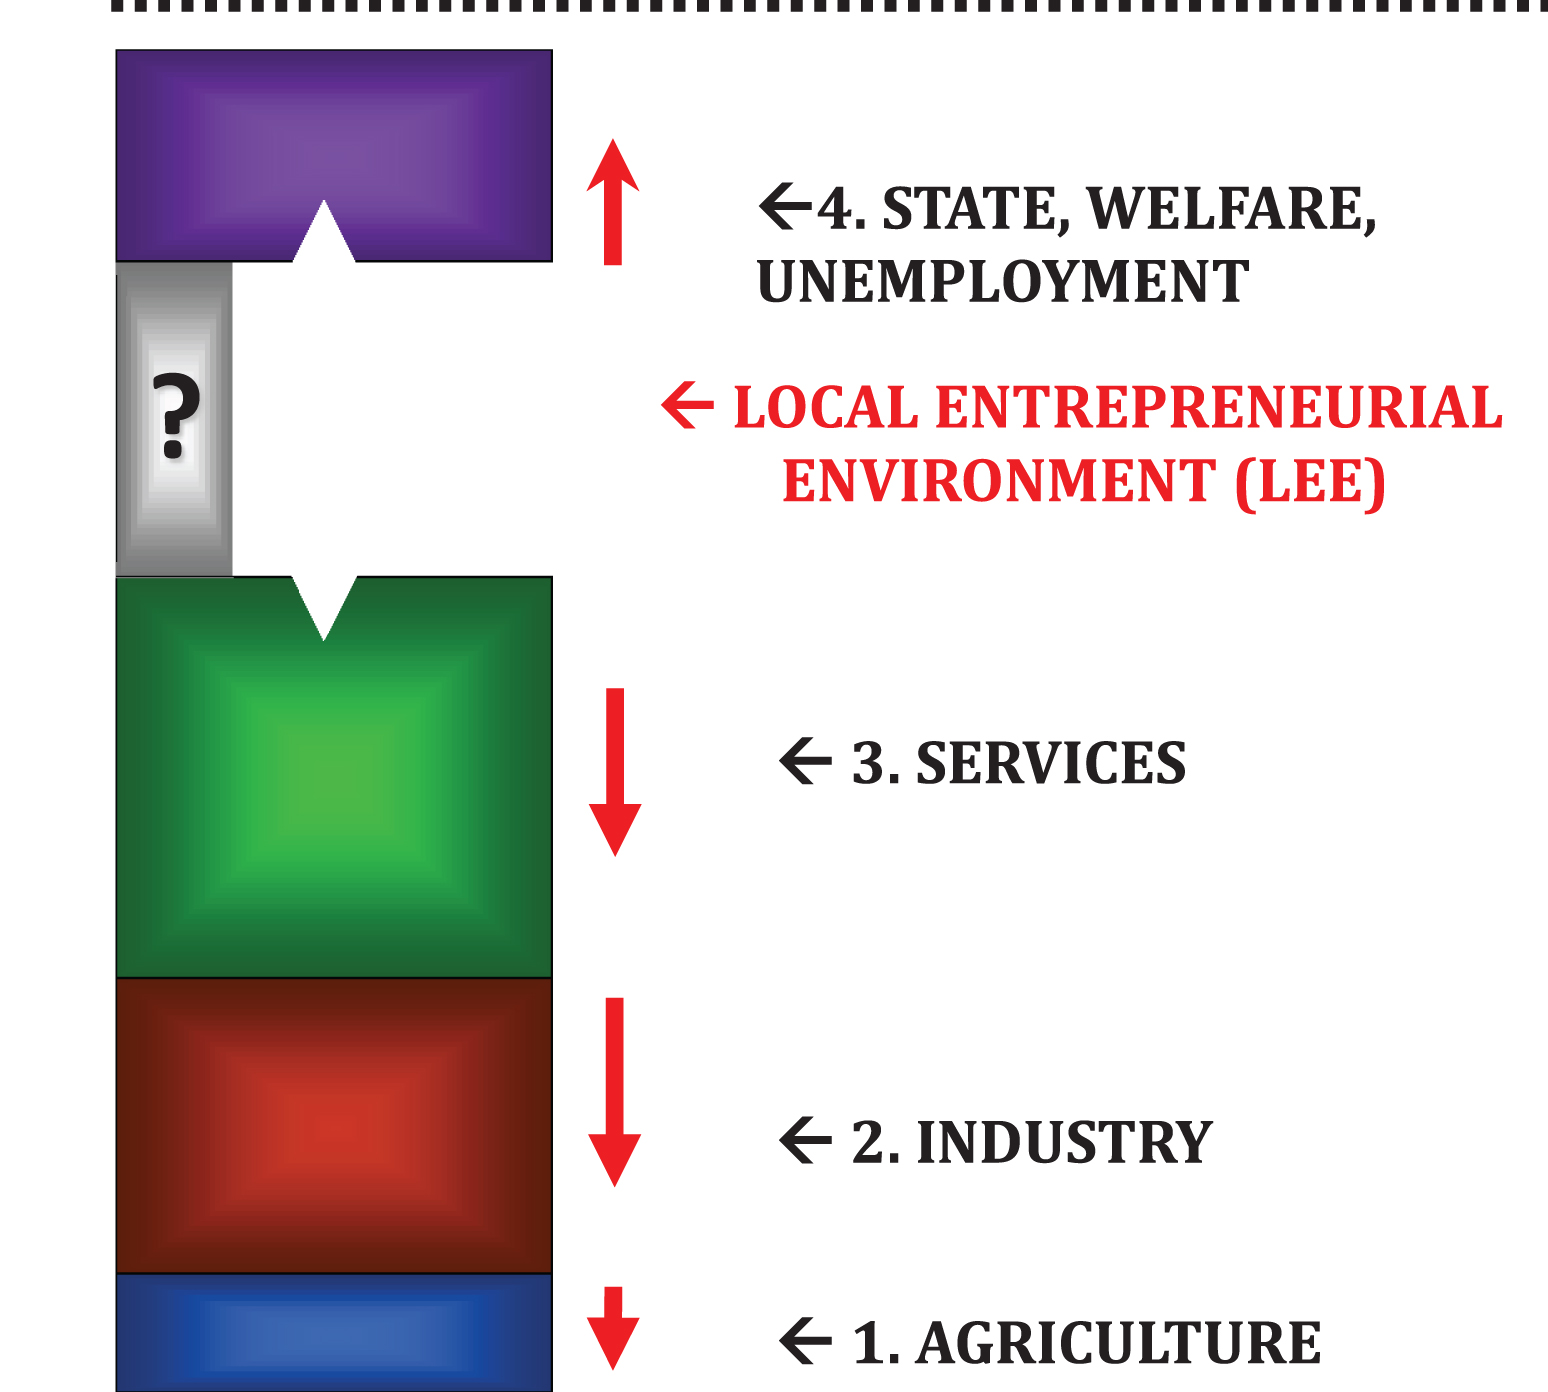 Metamorphosis towards Local Entrepreneurial Environments (LEE) (the arrows indicate long-term tendencies to employment decline.